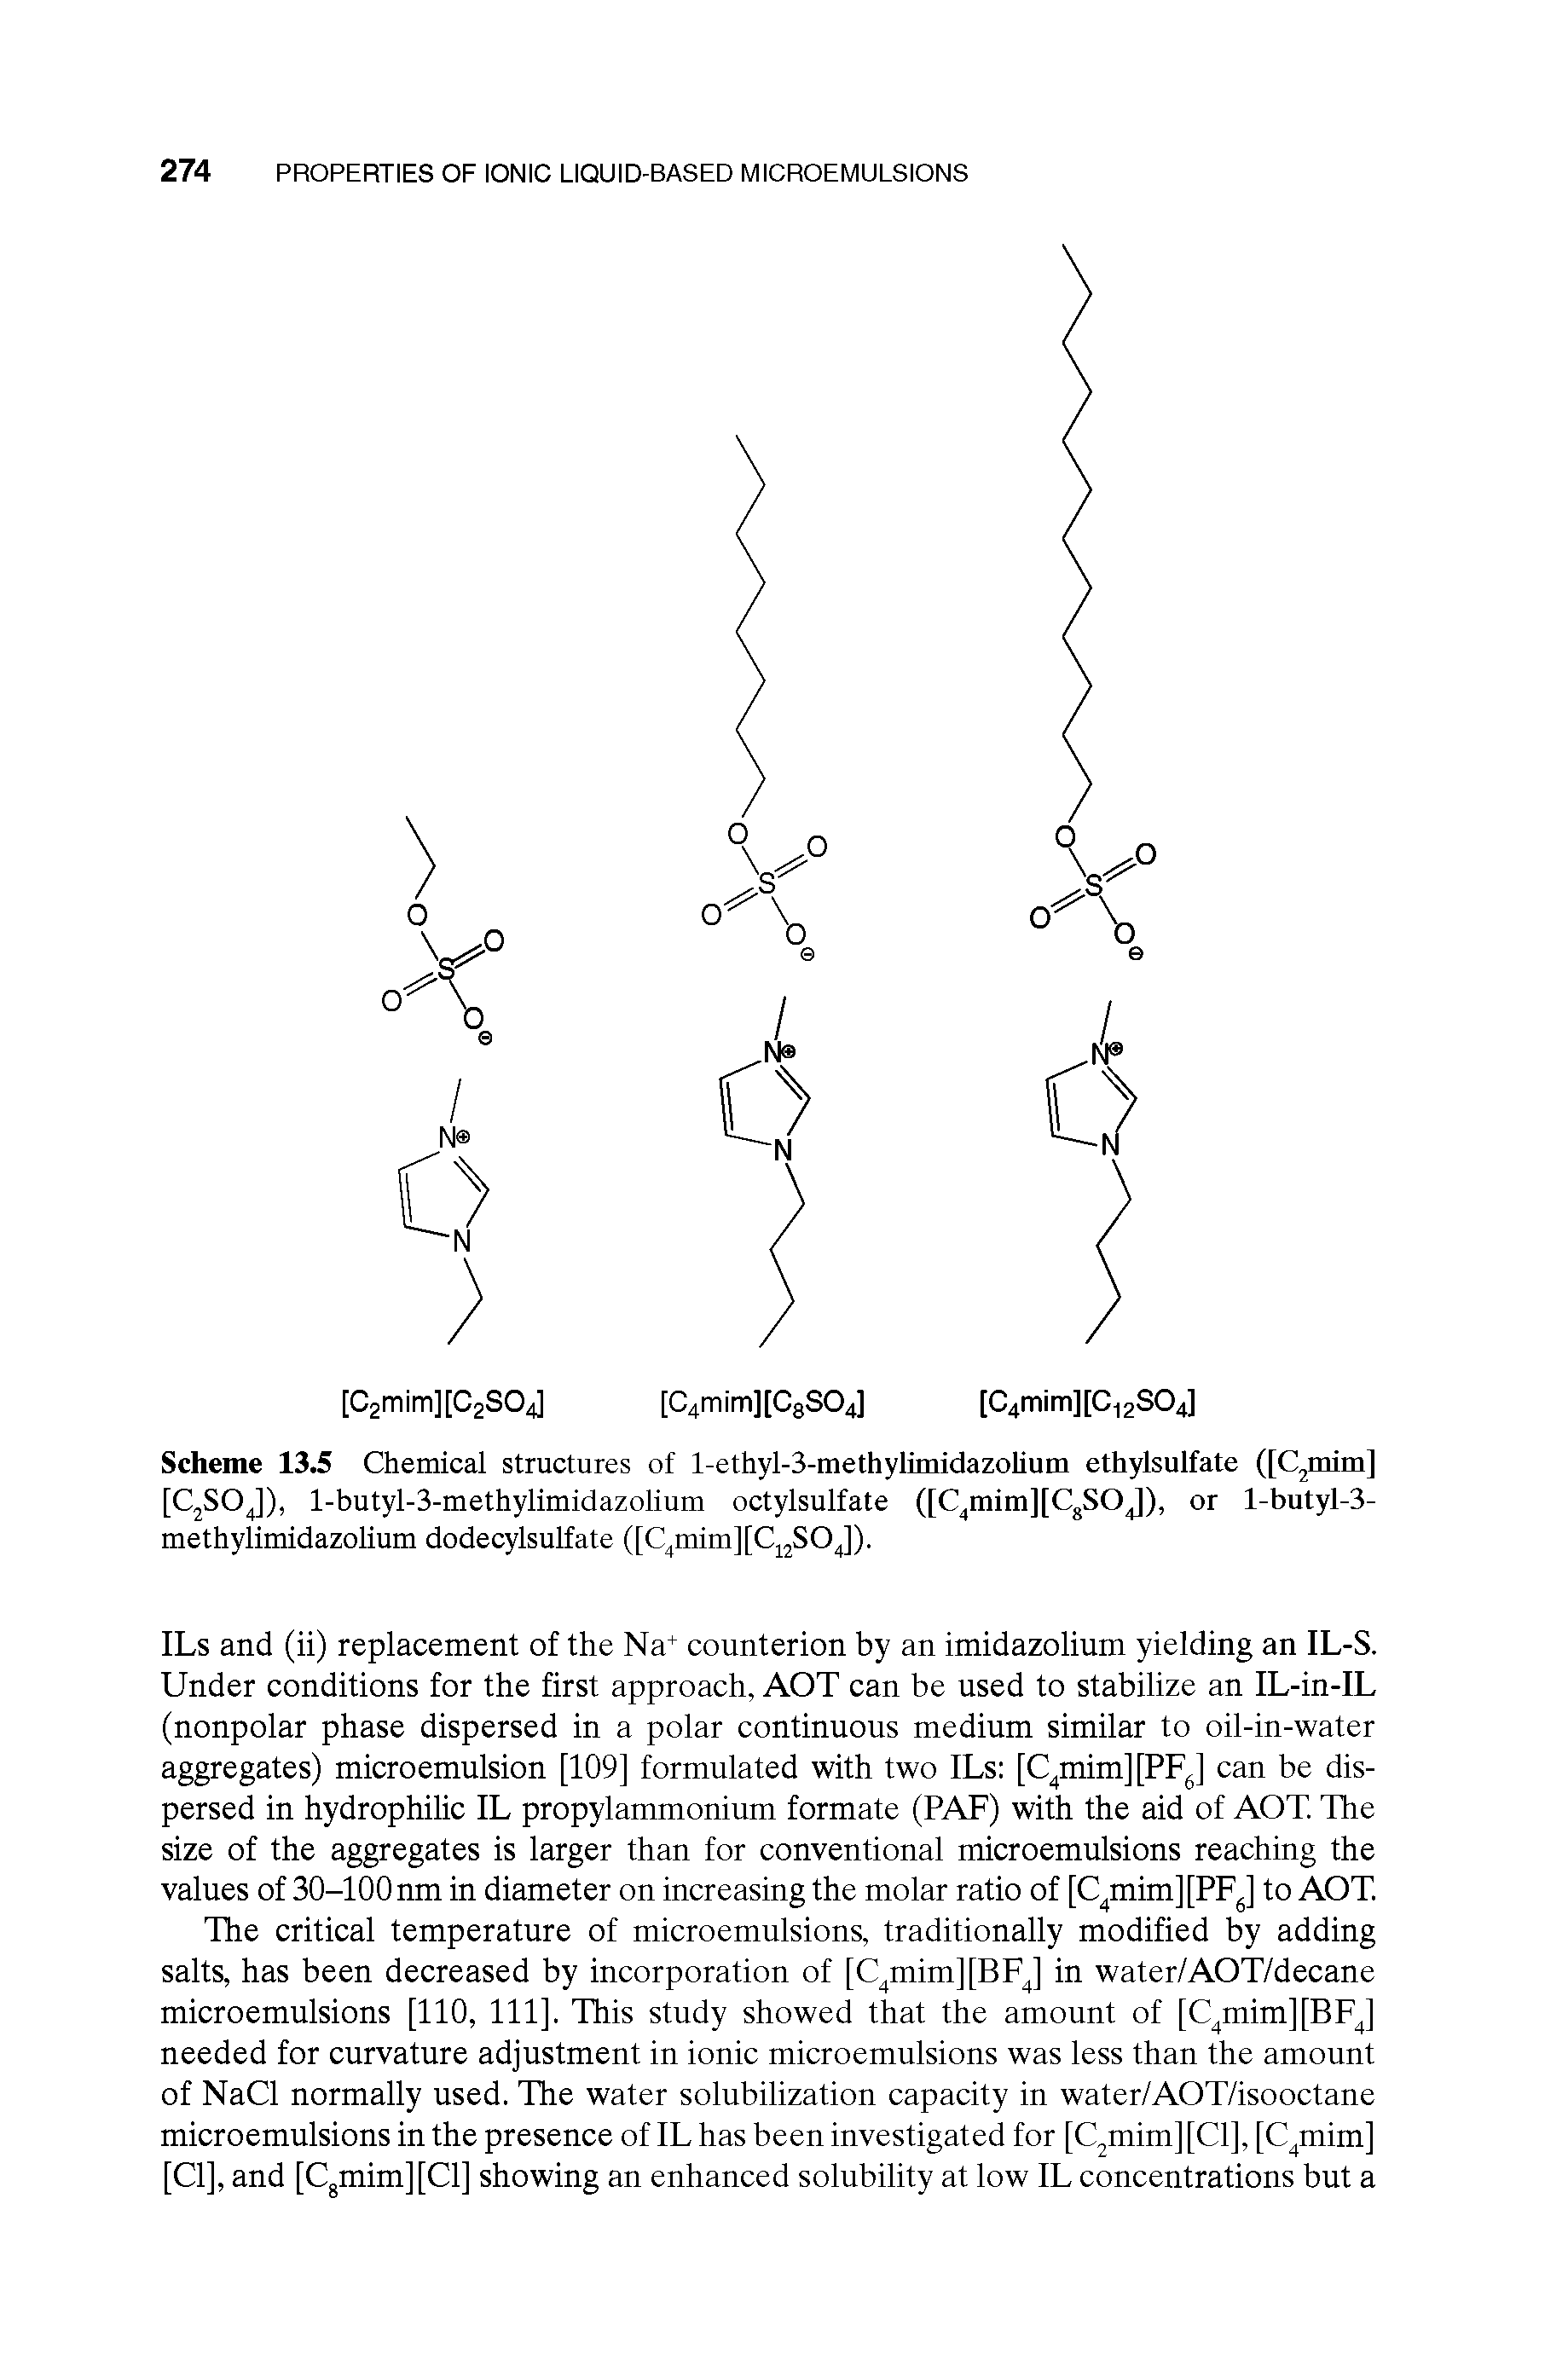 Scheme 13 Chemical structures of l-ethyl-3-methylimidazoHum ethylsulfate ([Cjinim] [CjSOJ), l-butyl-3-methylimidazolium octylsulfate ([C mim][CgSOJ), or l-butyl-3-methylimidazolium dodecylsulfate ([C mim][Cj2SOJ).